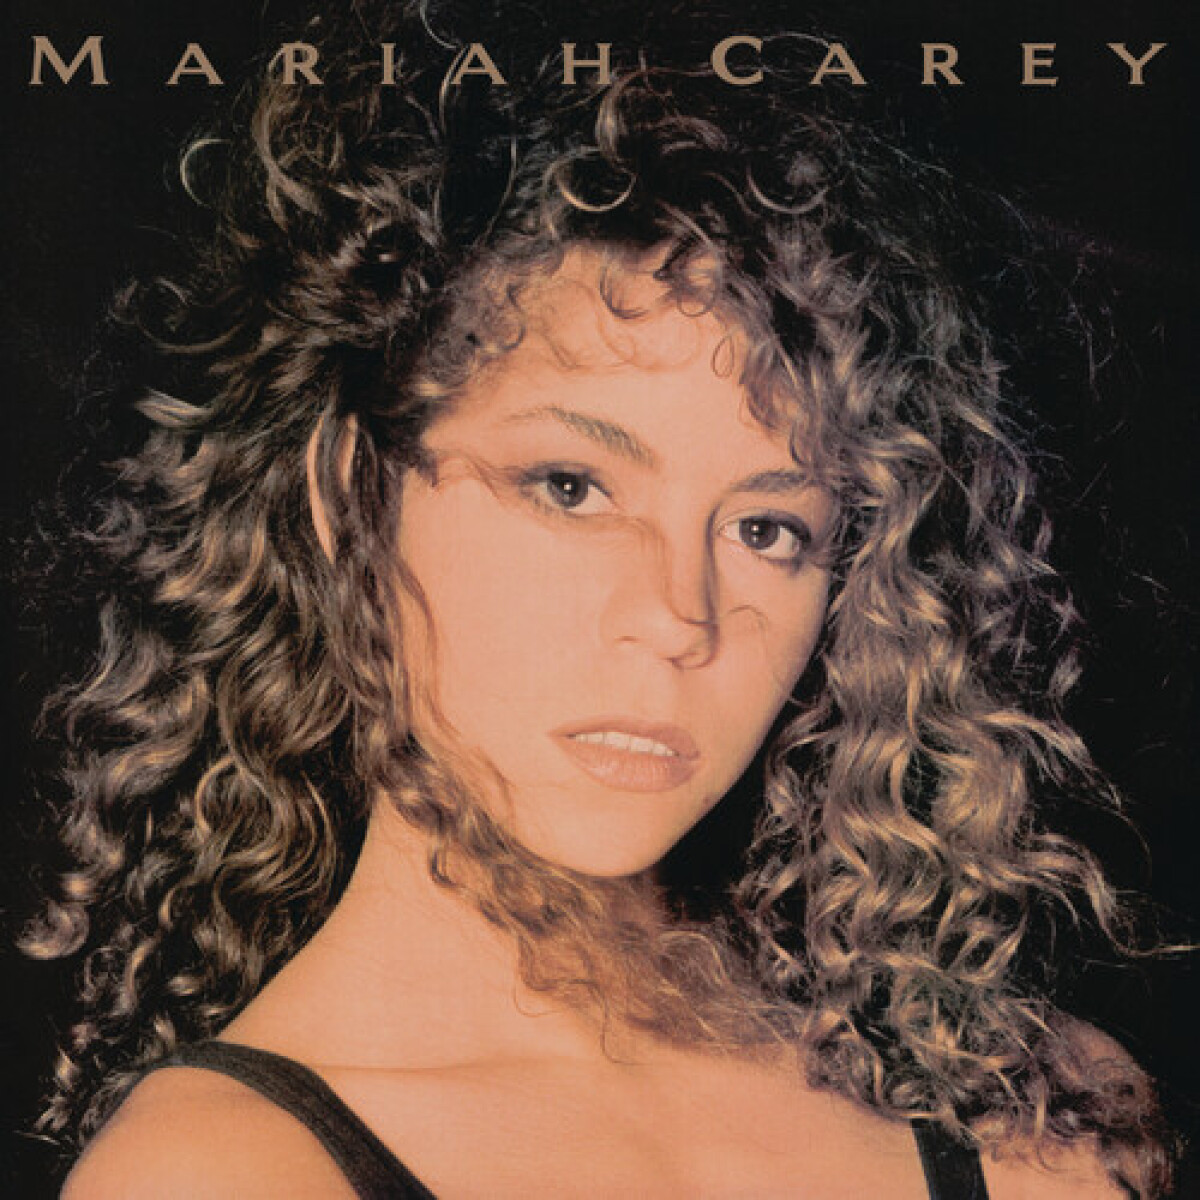 (l) Carey, Mariah - Mariah Carey - Vinilo 